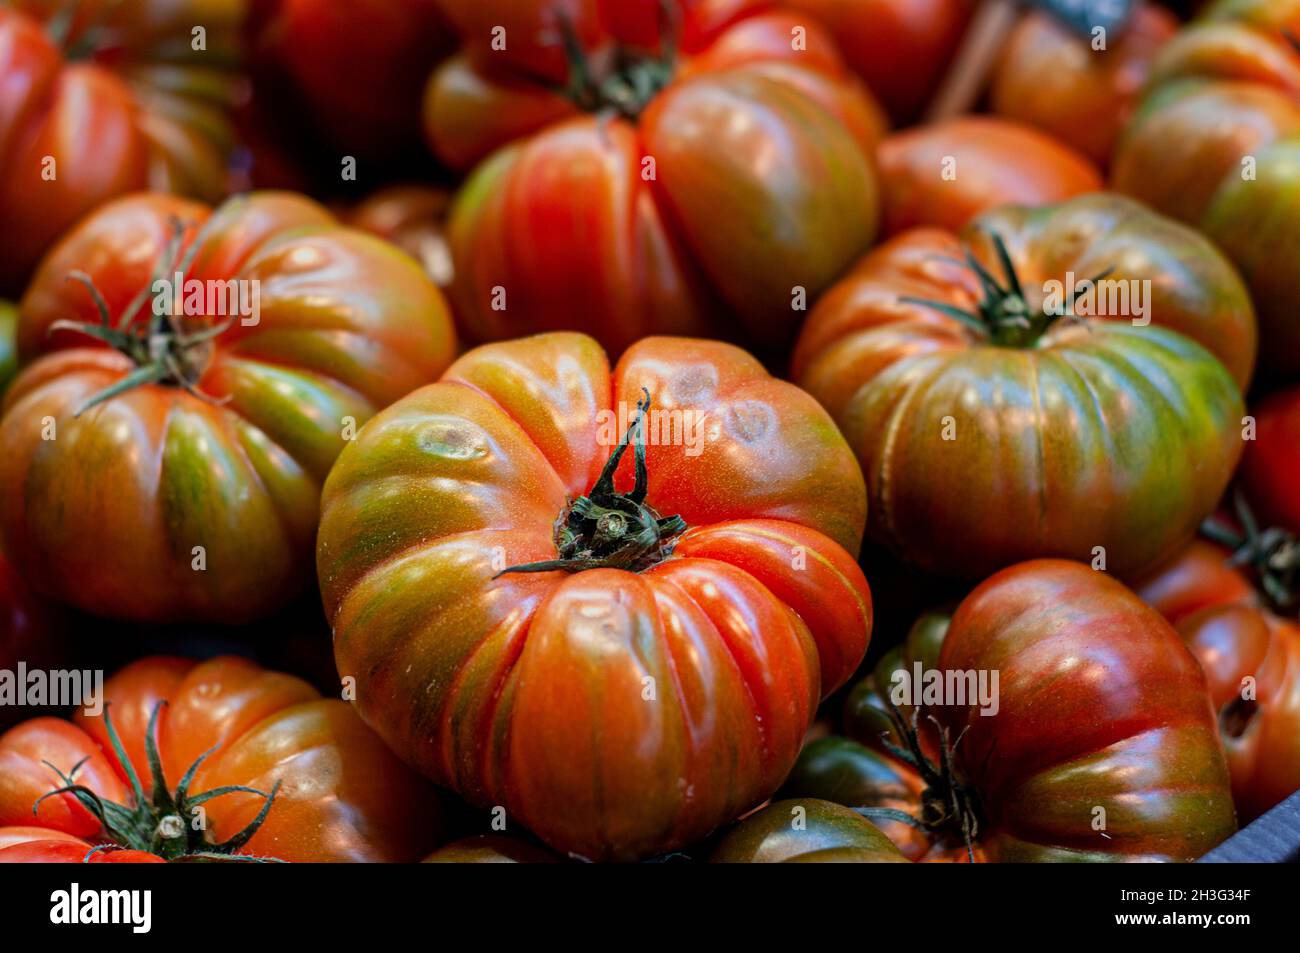 Mercat de Sant Josep, Tomatoes at a stall in the Boqueria market in Barcelona, Catalonia, Spain Stock Photo